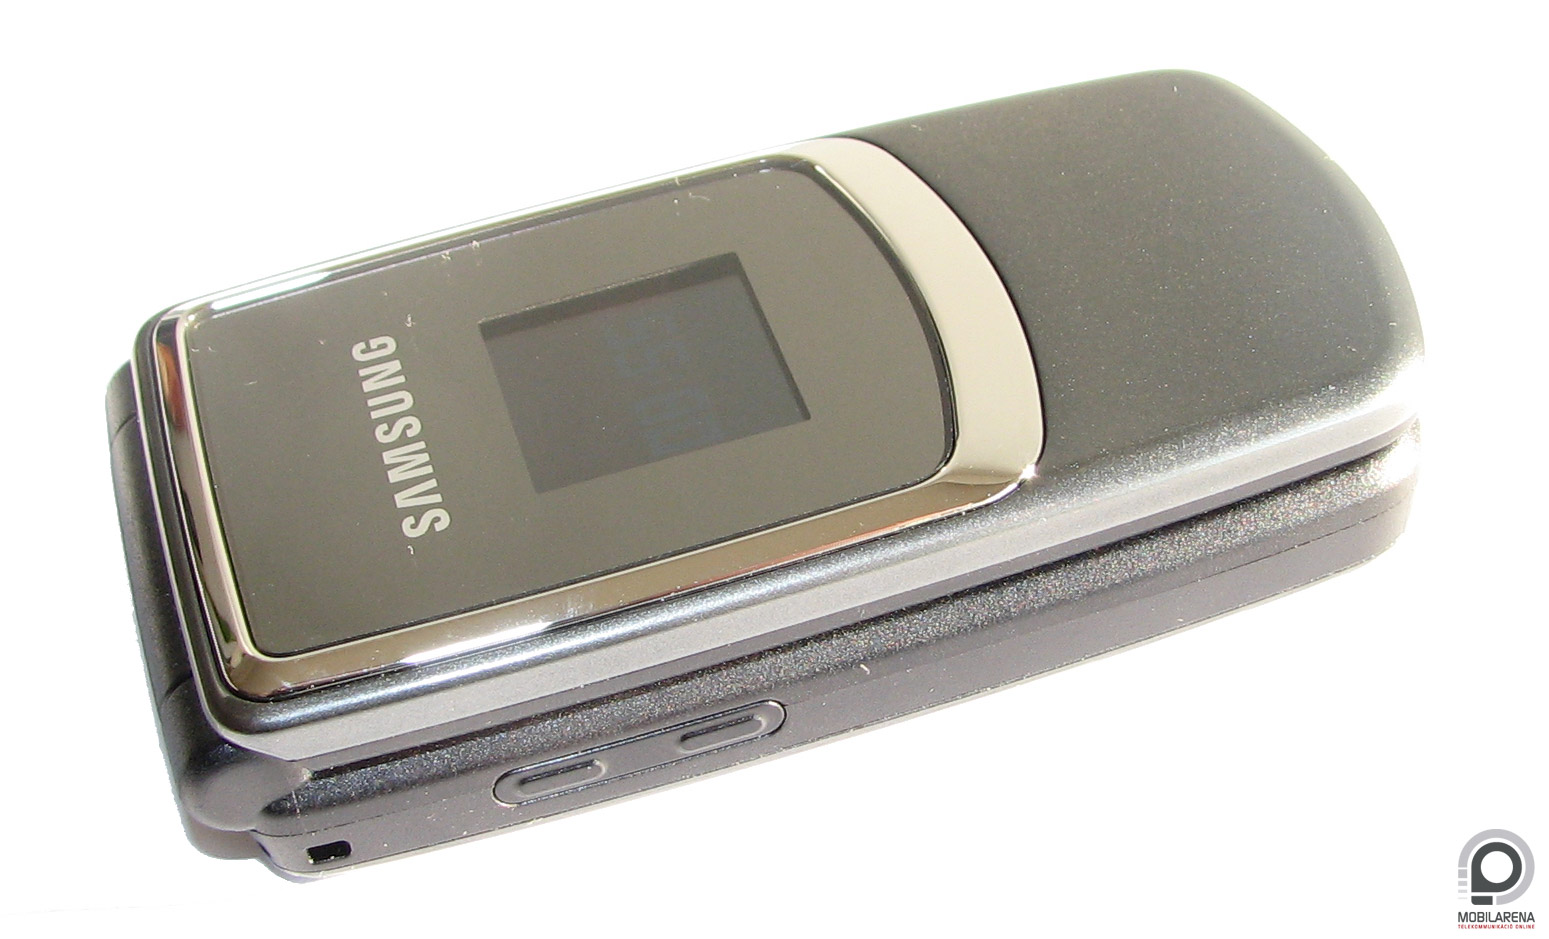 Samsung B320   small guy with nitro   Mobilarena MobileArsenal